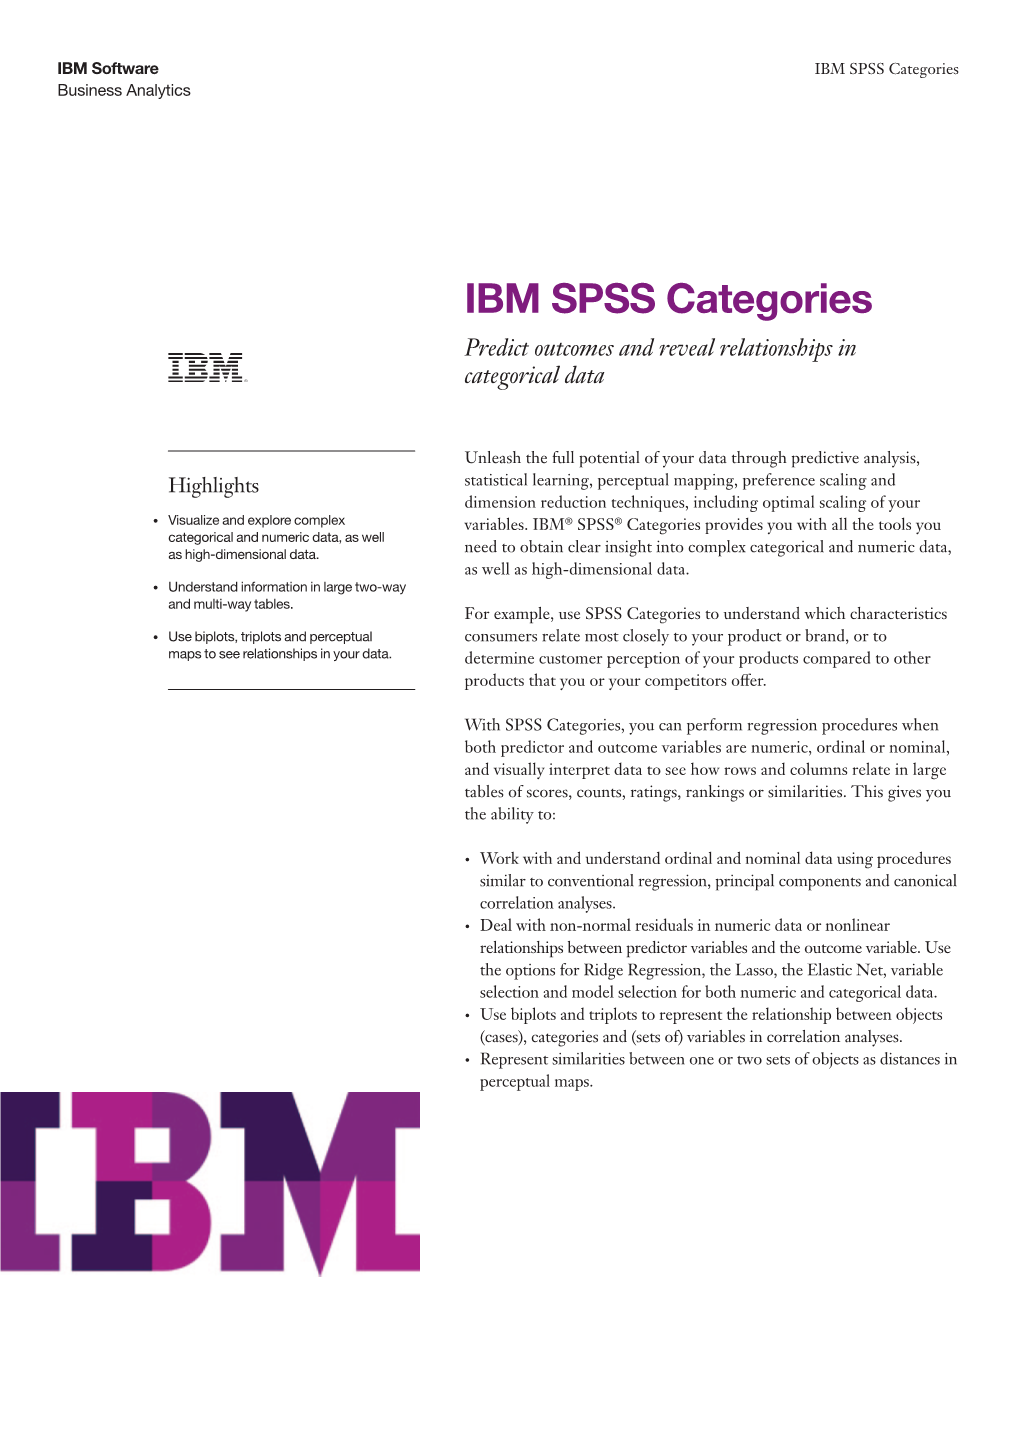 IBM SPSS Categories Business Analytics